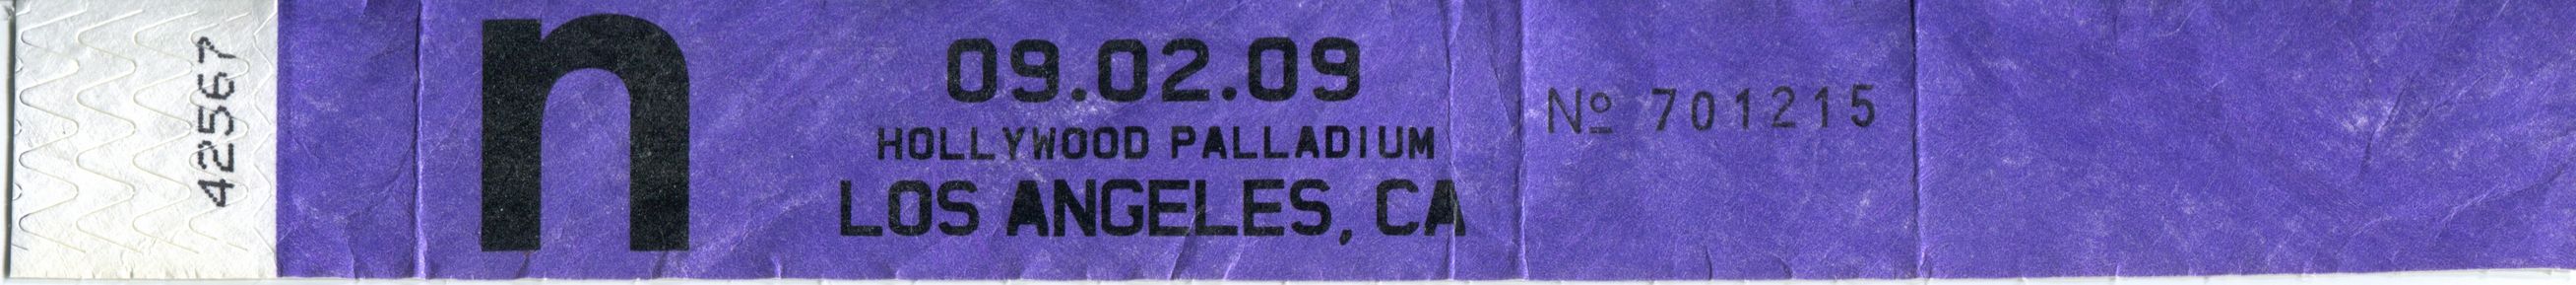 2009/09/02 Ticket